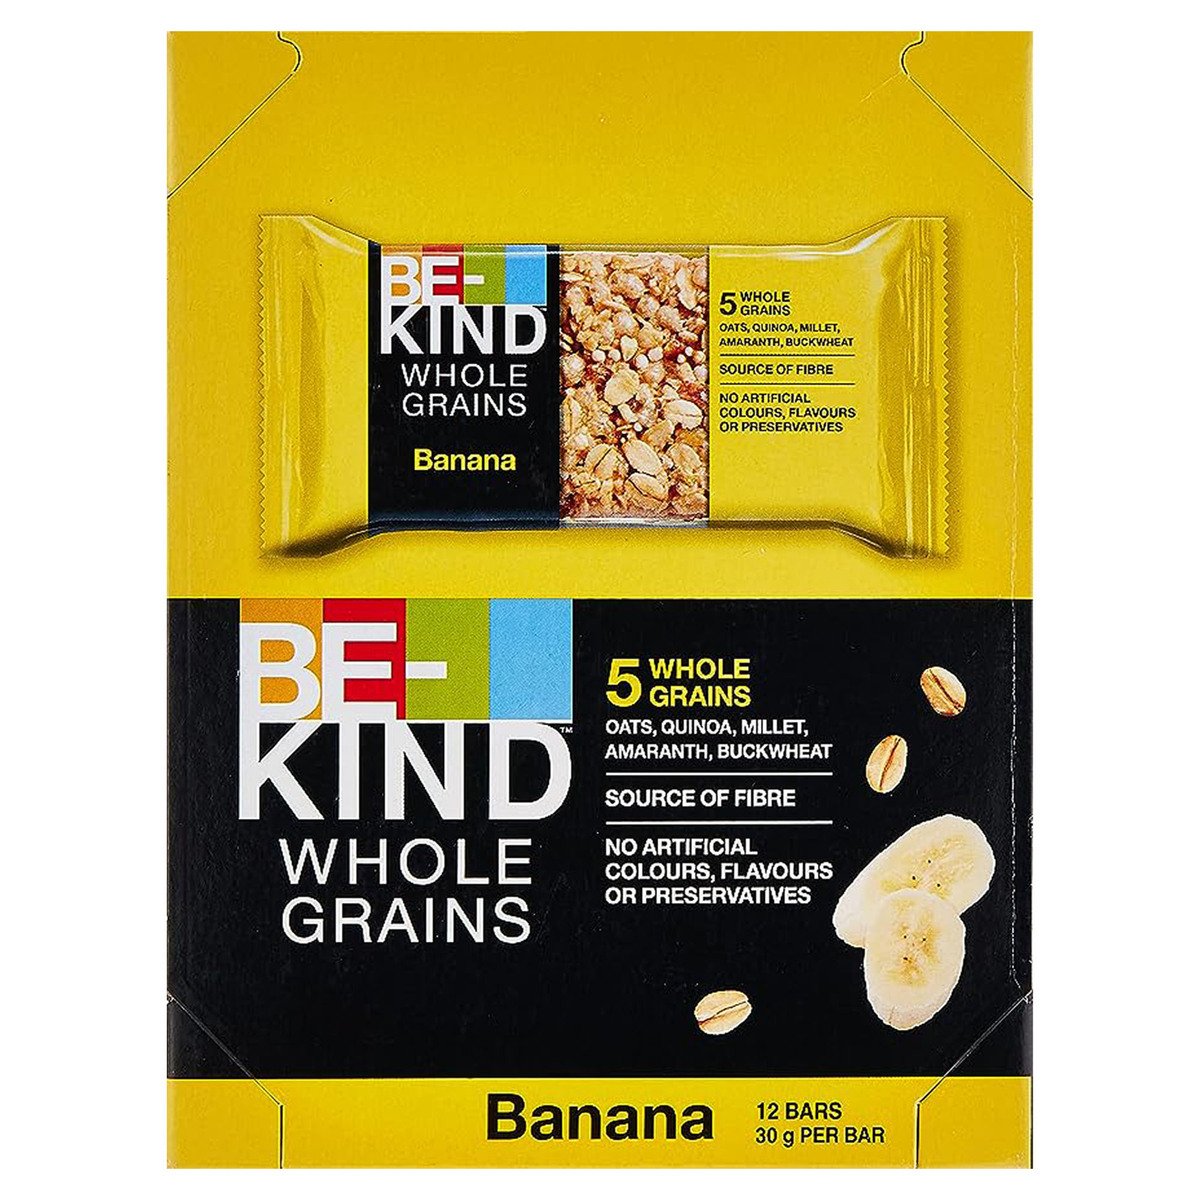 Be-Kind Whole Grains Banana Bar 30 g